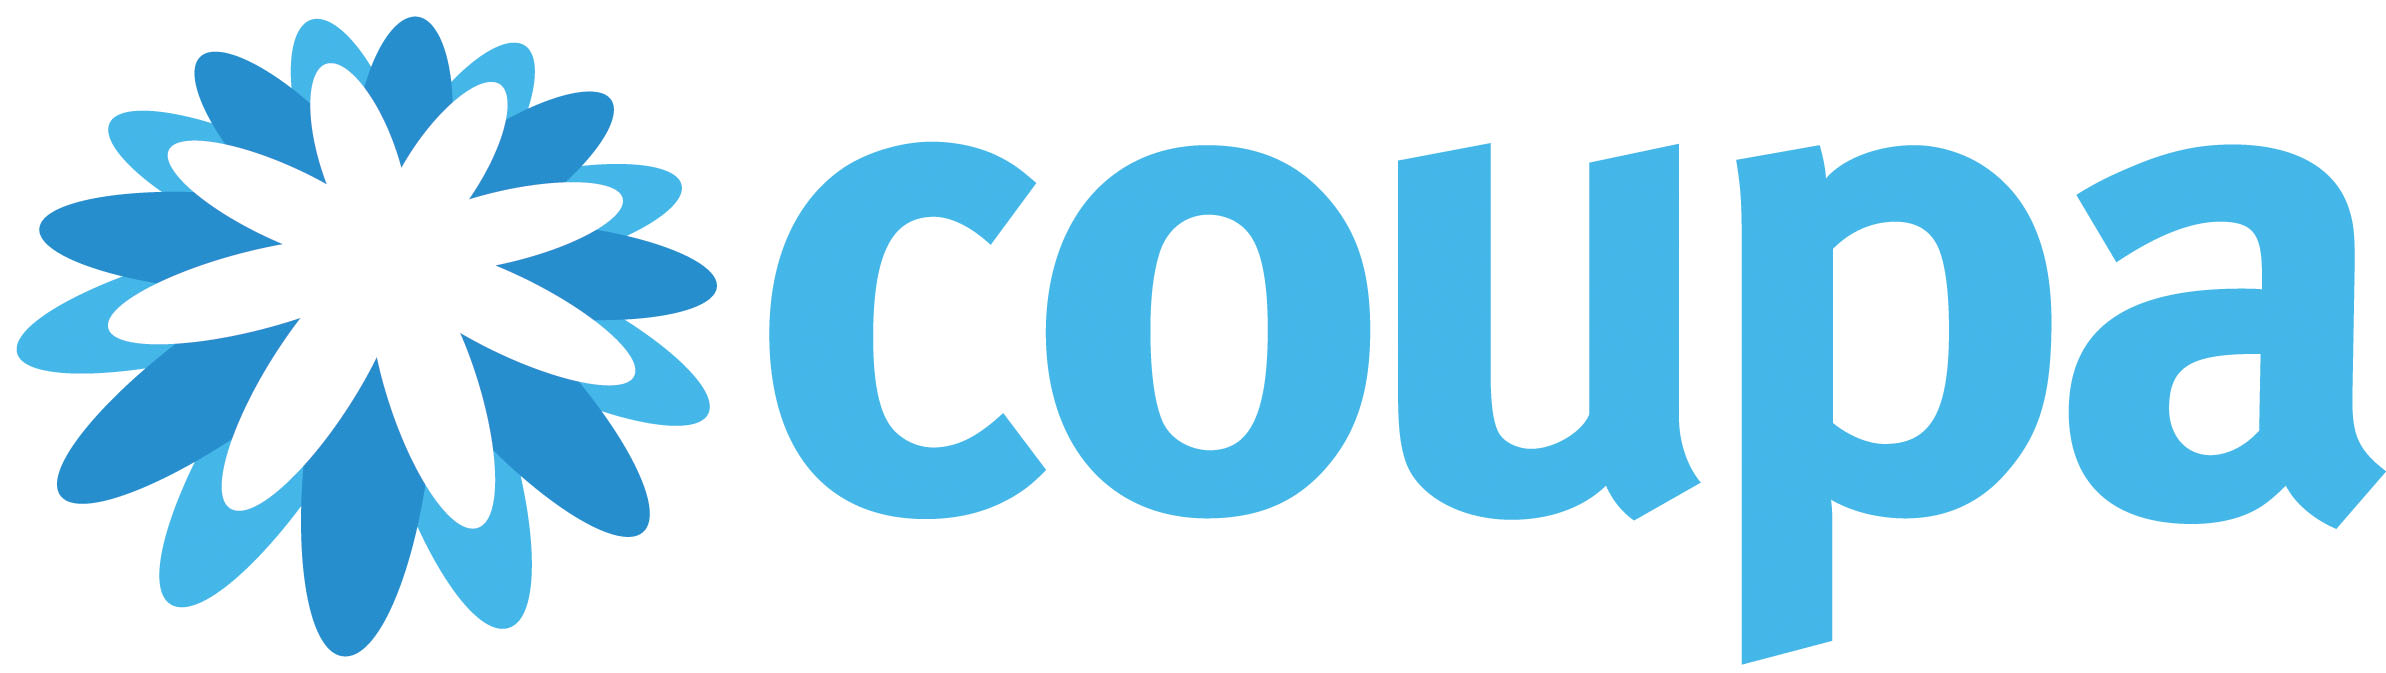 coupa procurement platform